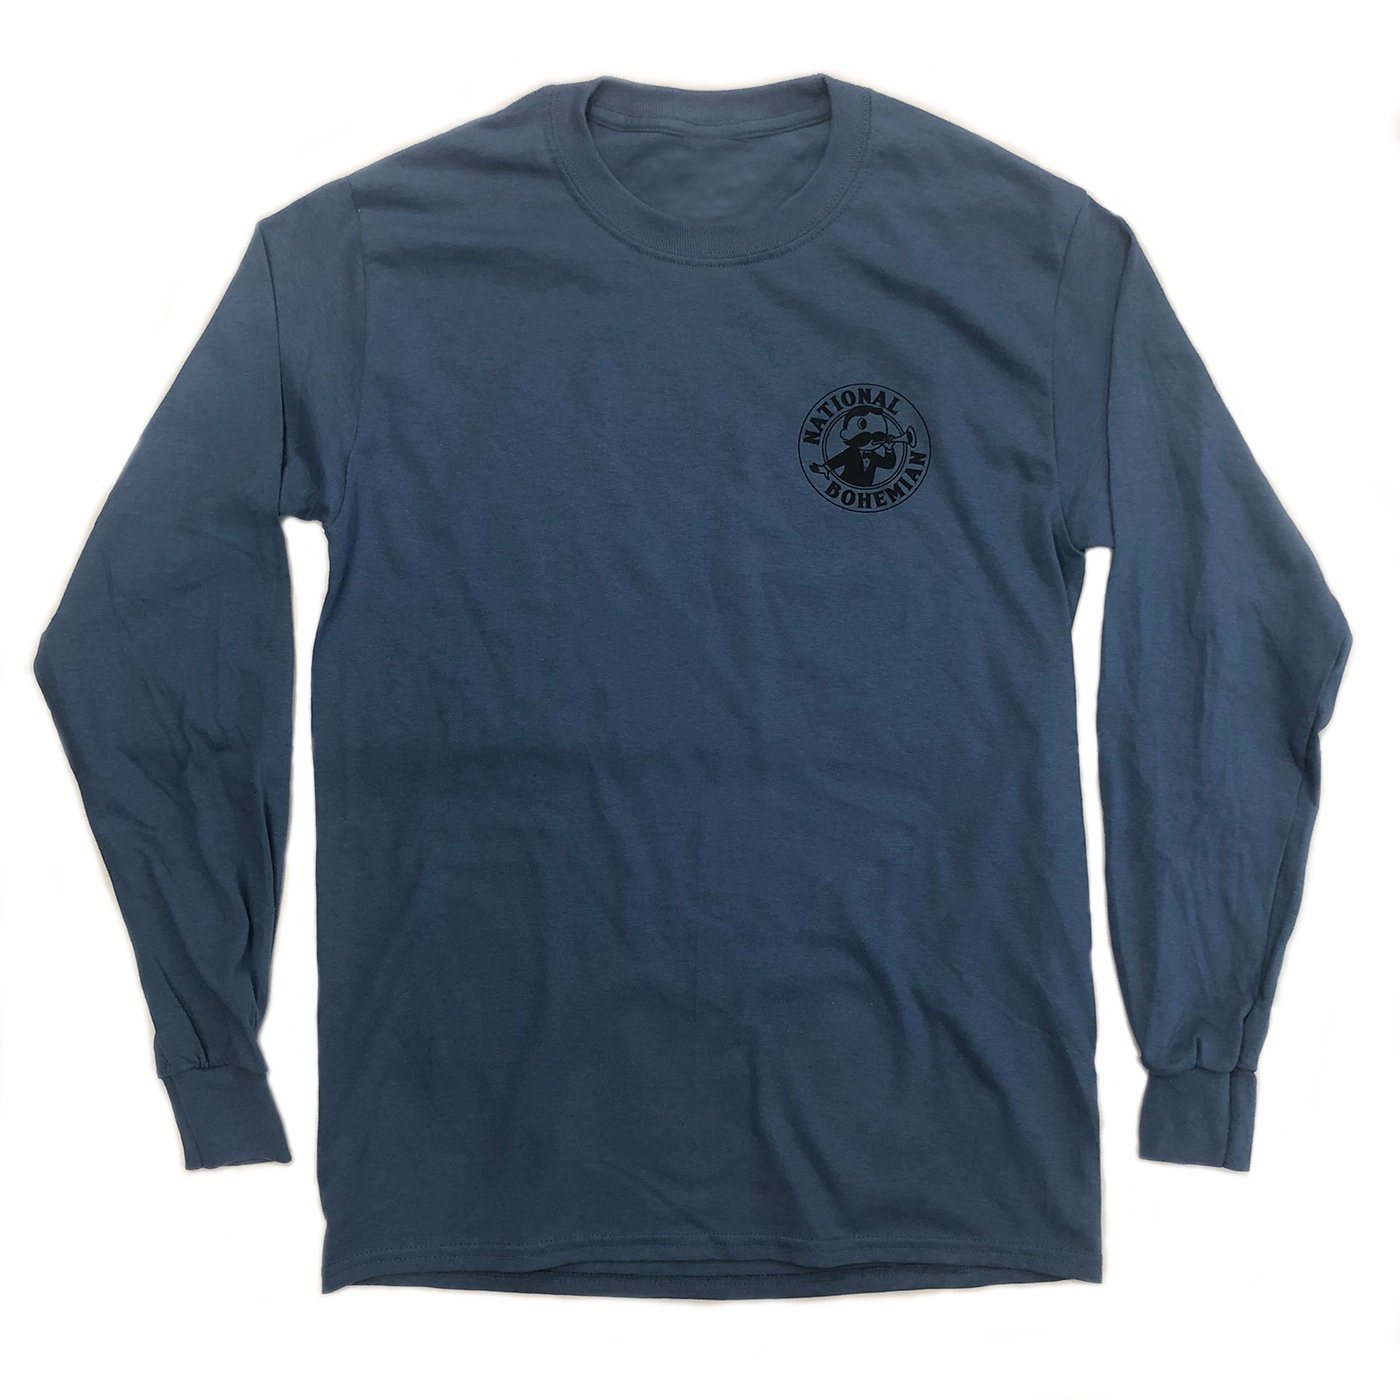 Natty Boh Pride of the Chesapeake (Indigo Blue) / Long Sleeve Shirt - Route One Apparel